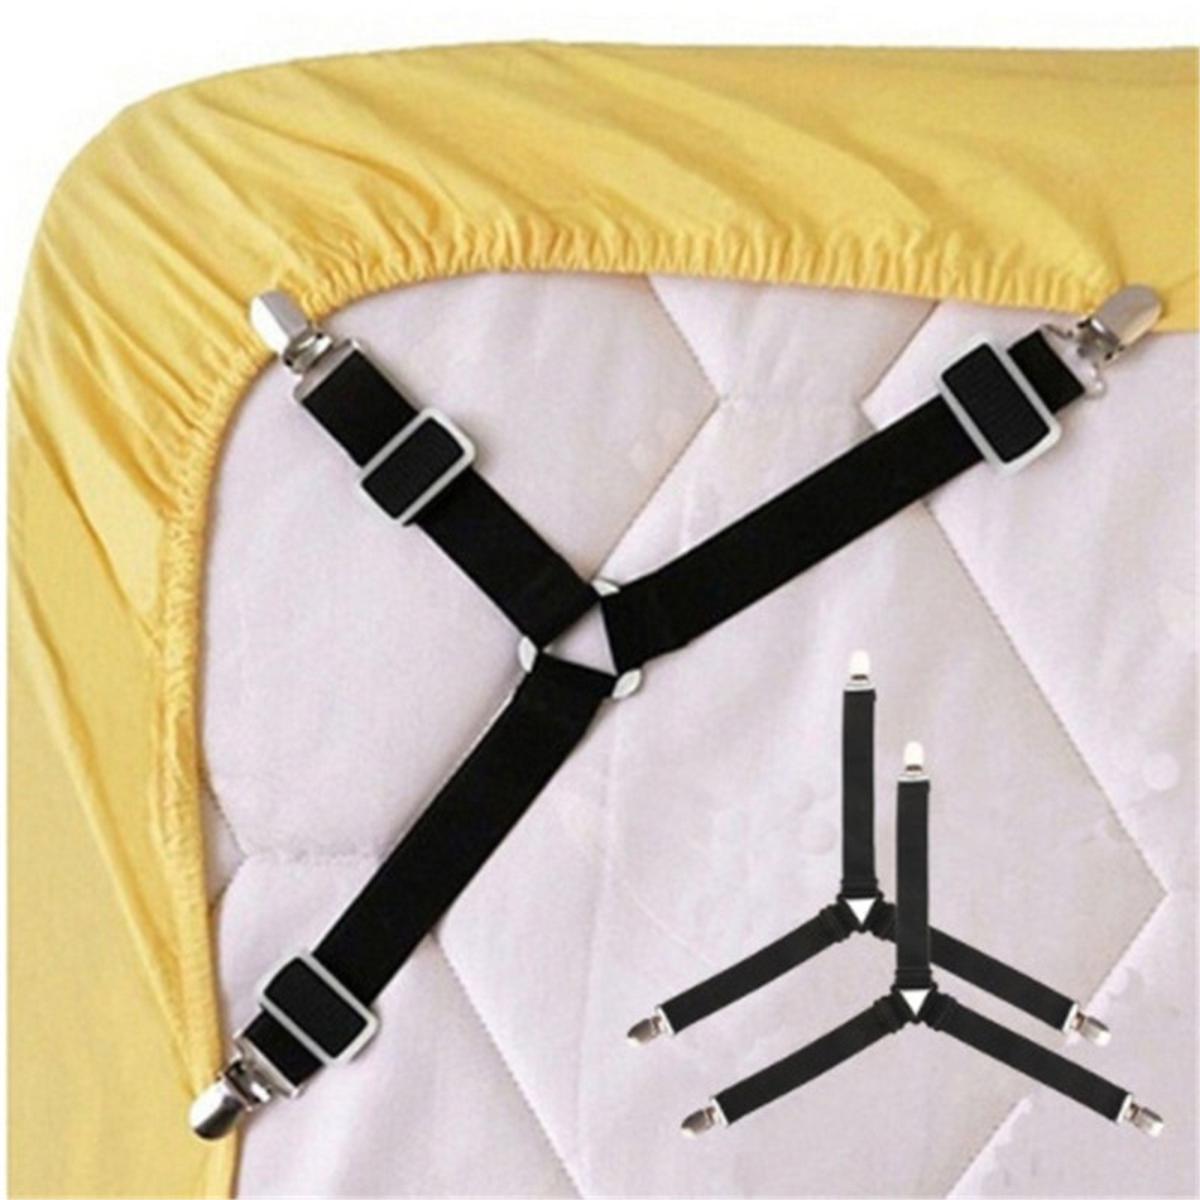 4pcs/set Elastic Bed Sheet Grippers Clip Mattress Covers Blankets